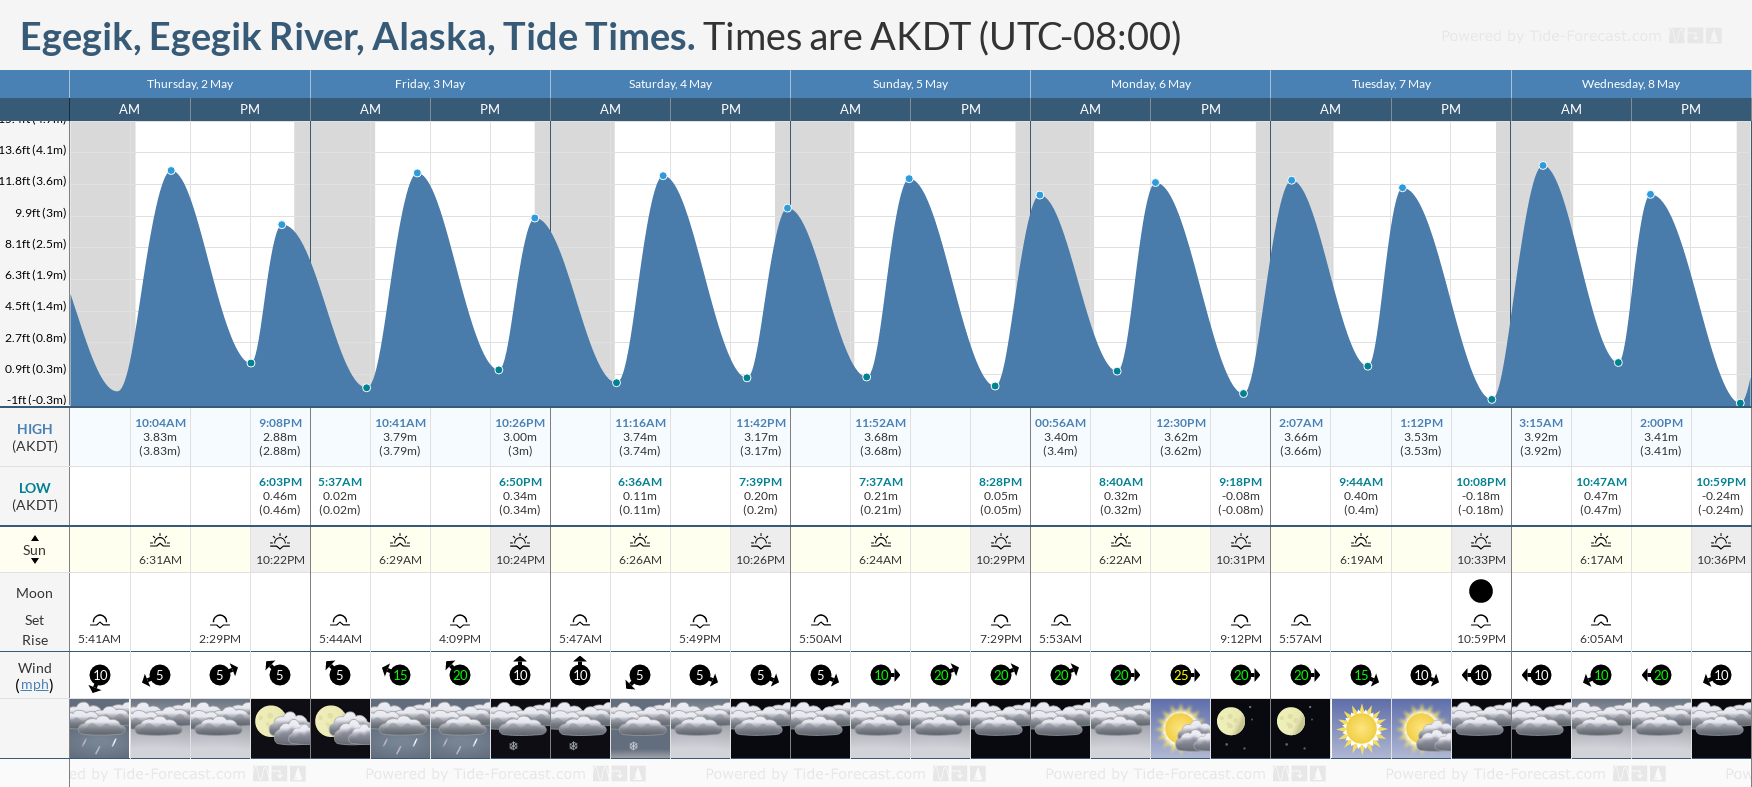 Egegik, Egegik River, Alaska Tide Chart including high and low tide times for the next 7 days